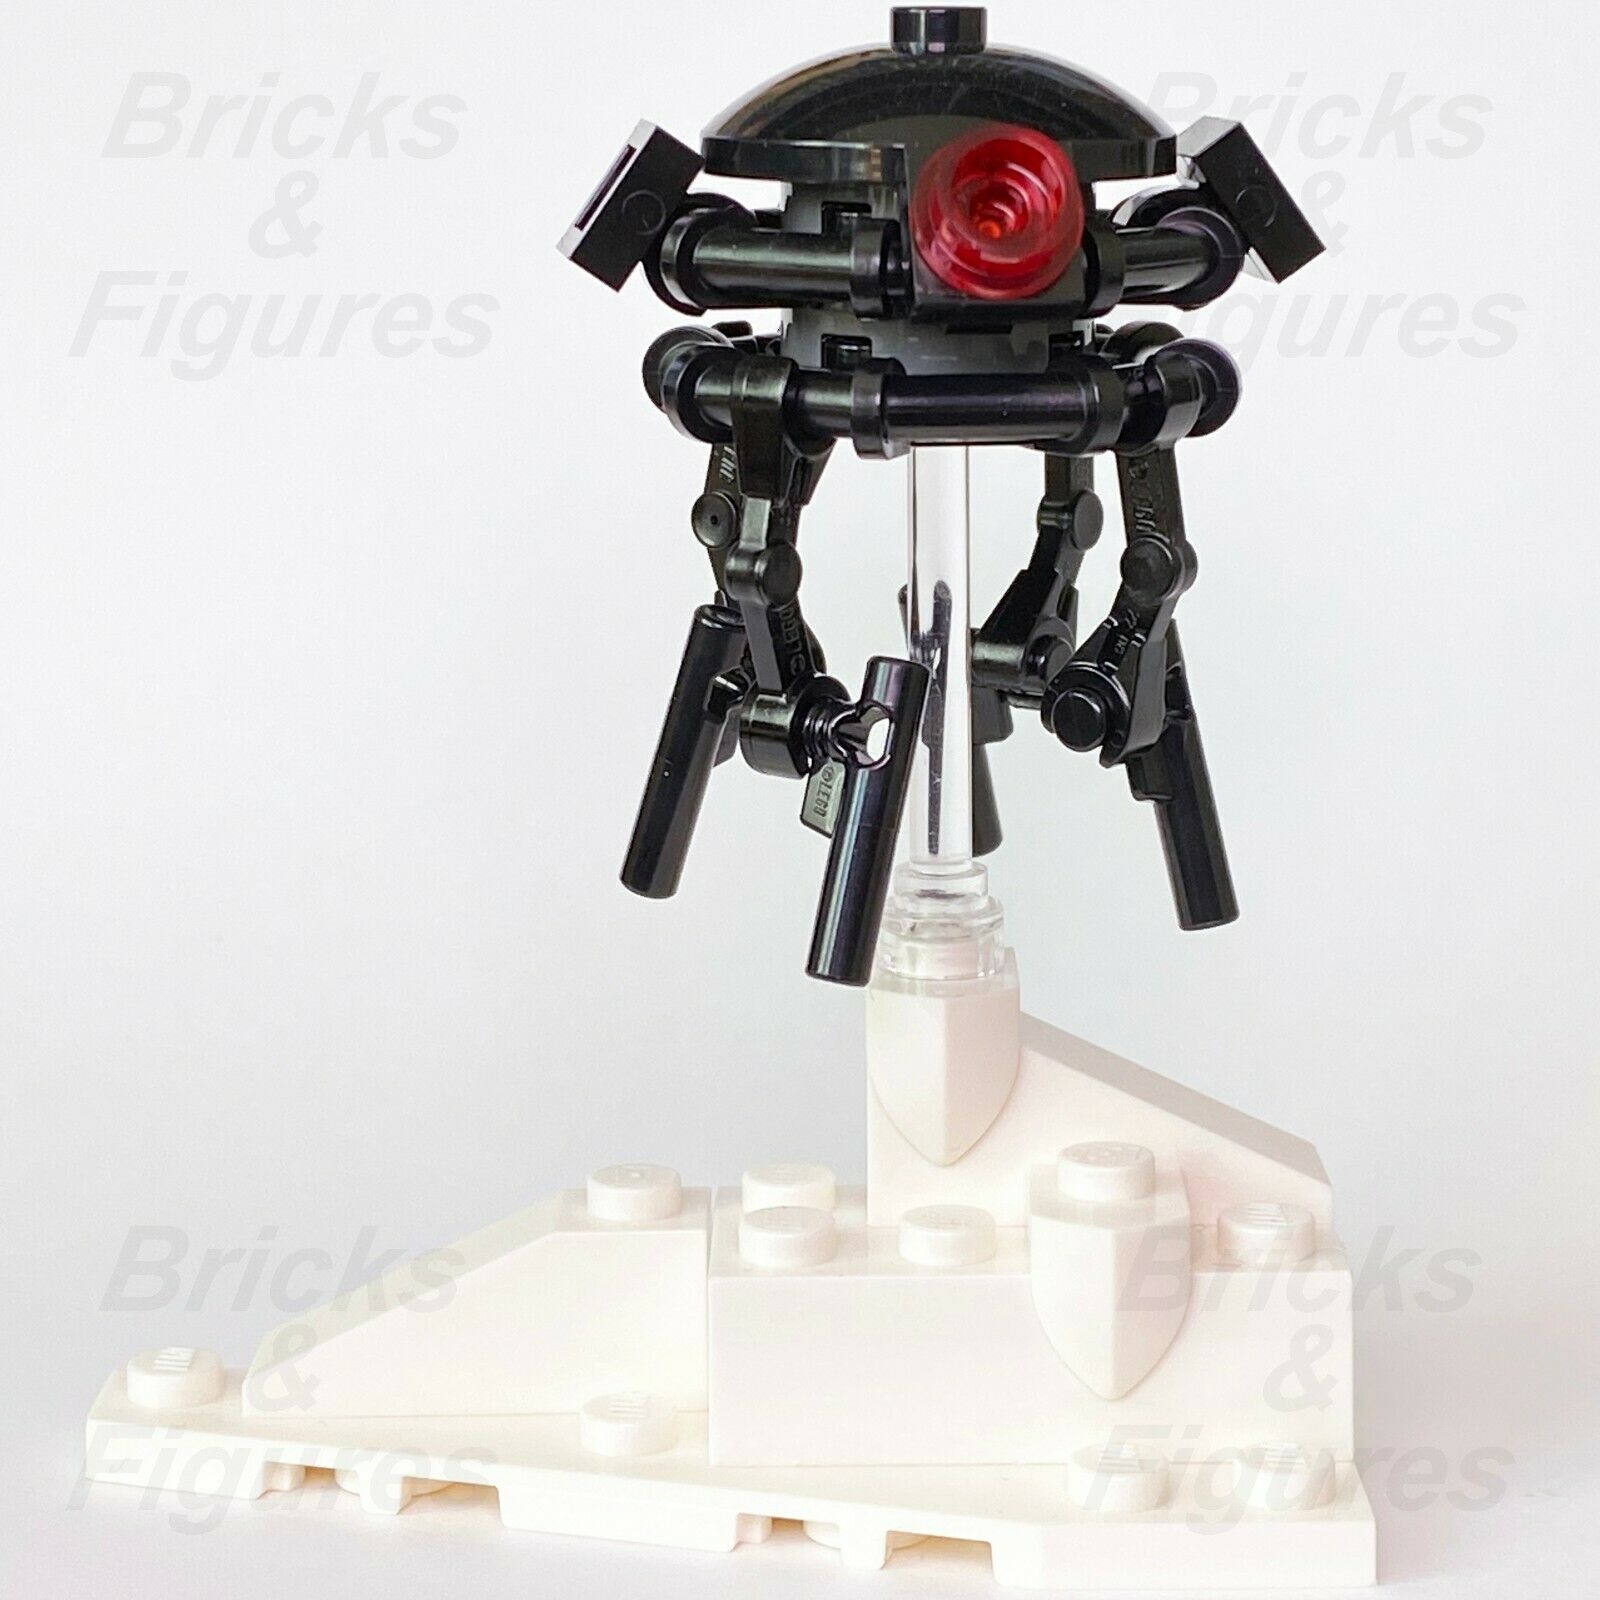 Star Wars LEGO Imperial Probe Droid Empire Strikes Back Foil Pack Minifigure - Bricks & Figures